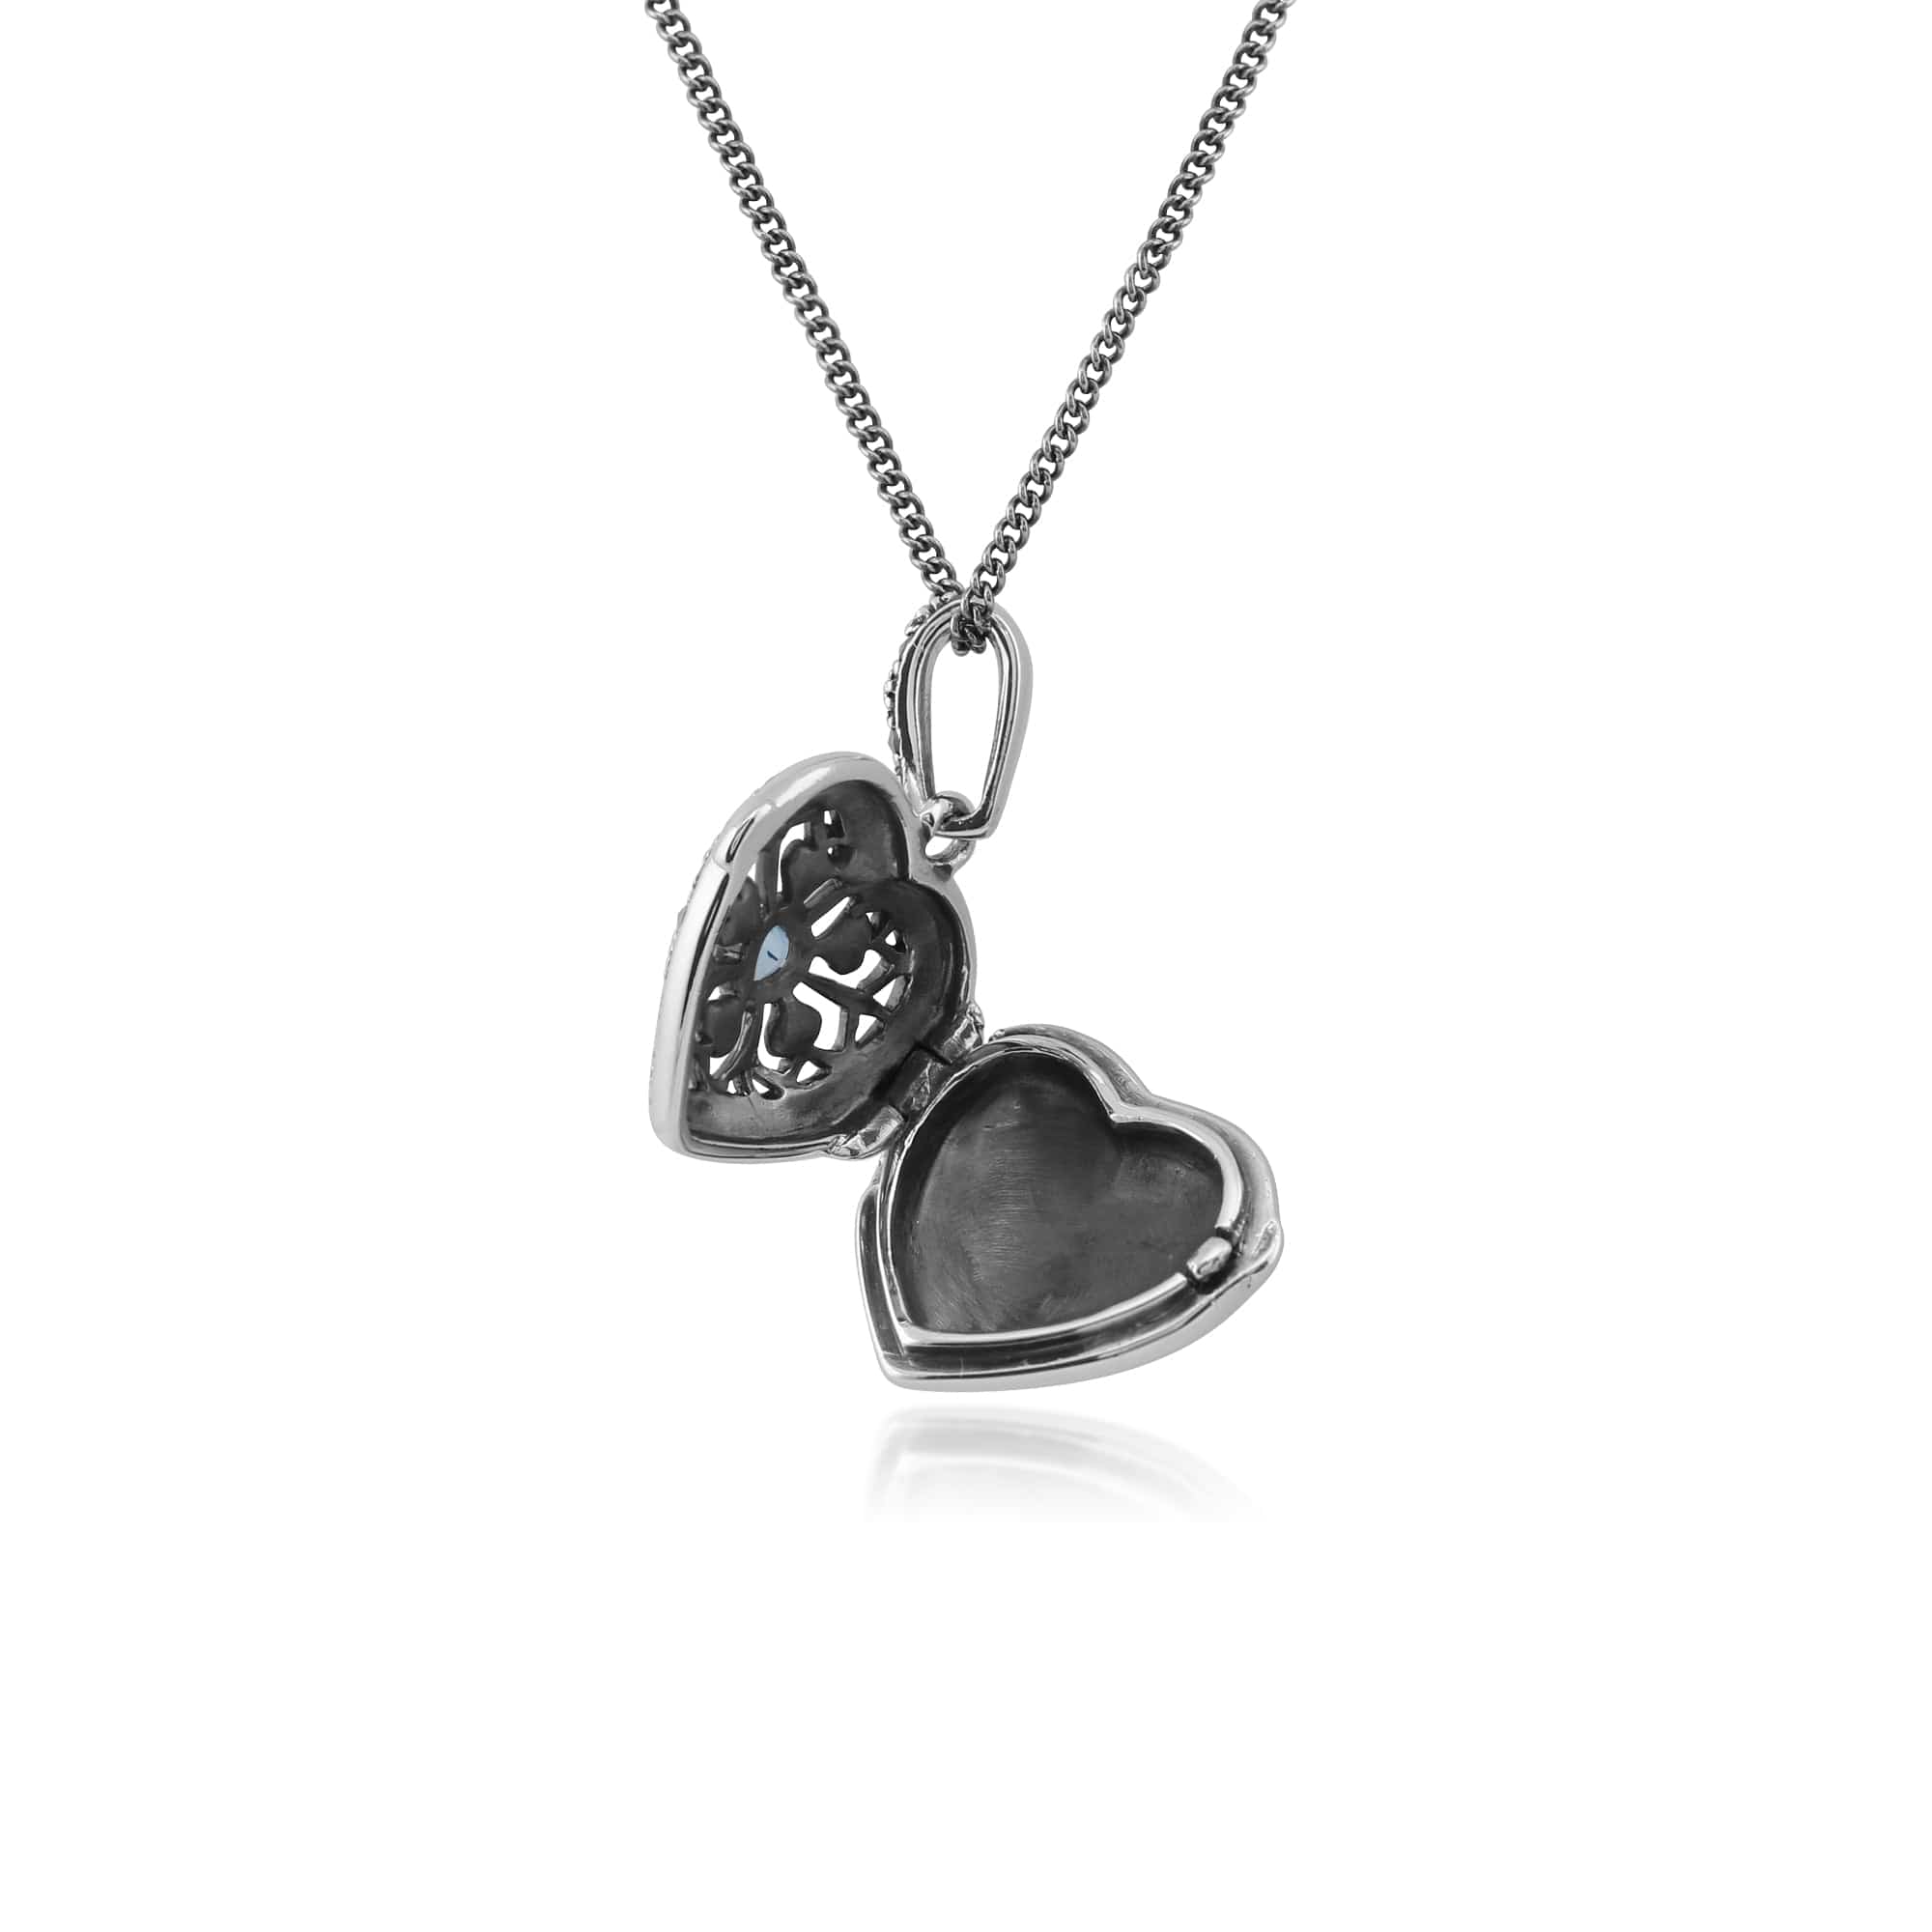 Art Nouveau Style Round Blue Topaz & Marcasite Heart Necklace in 925 Sterling Silver - Gemondo